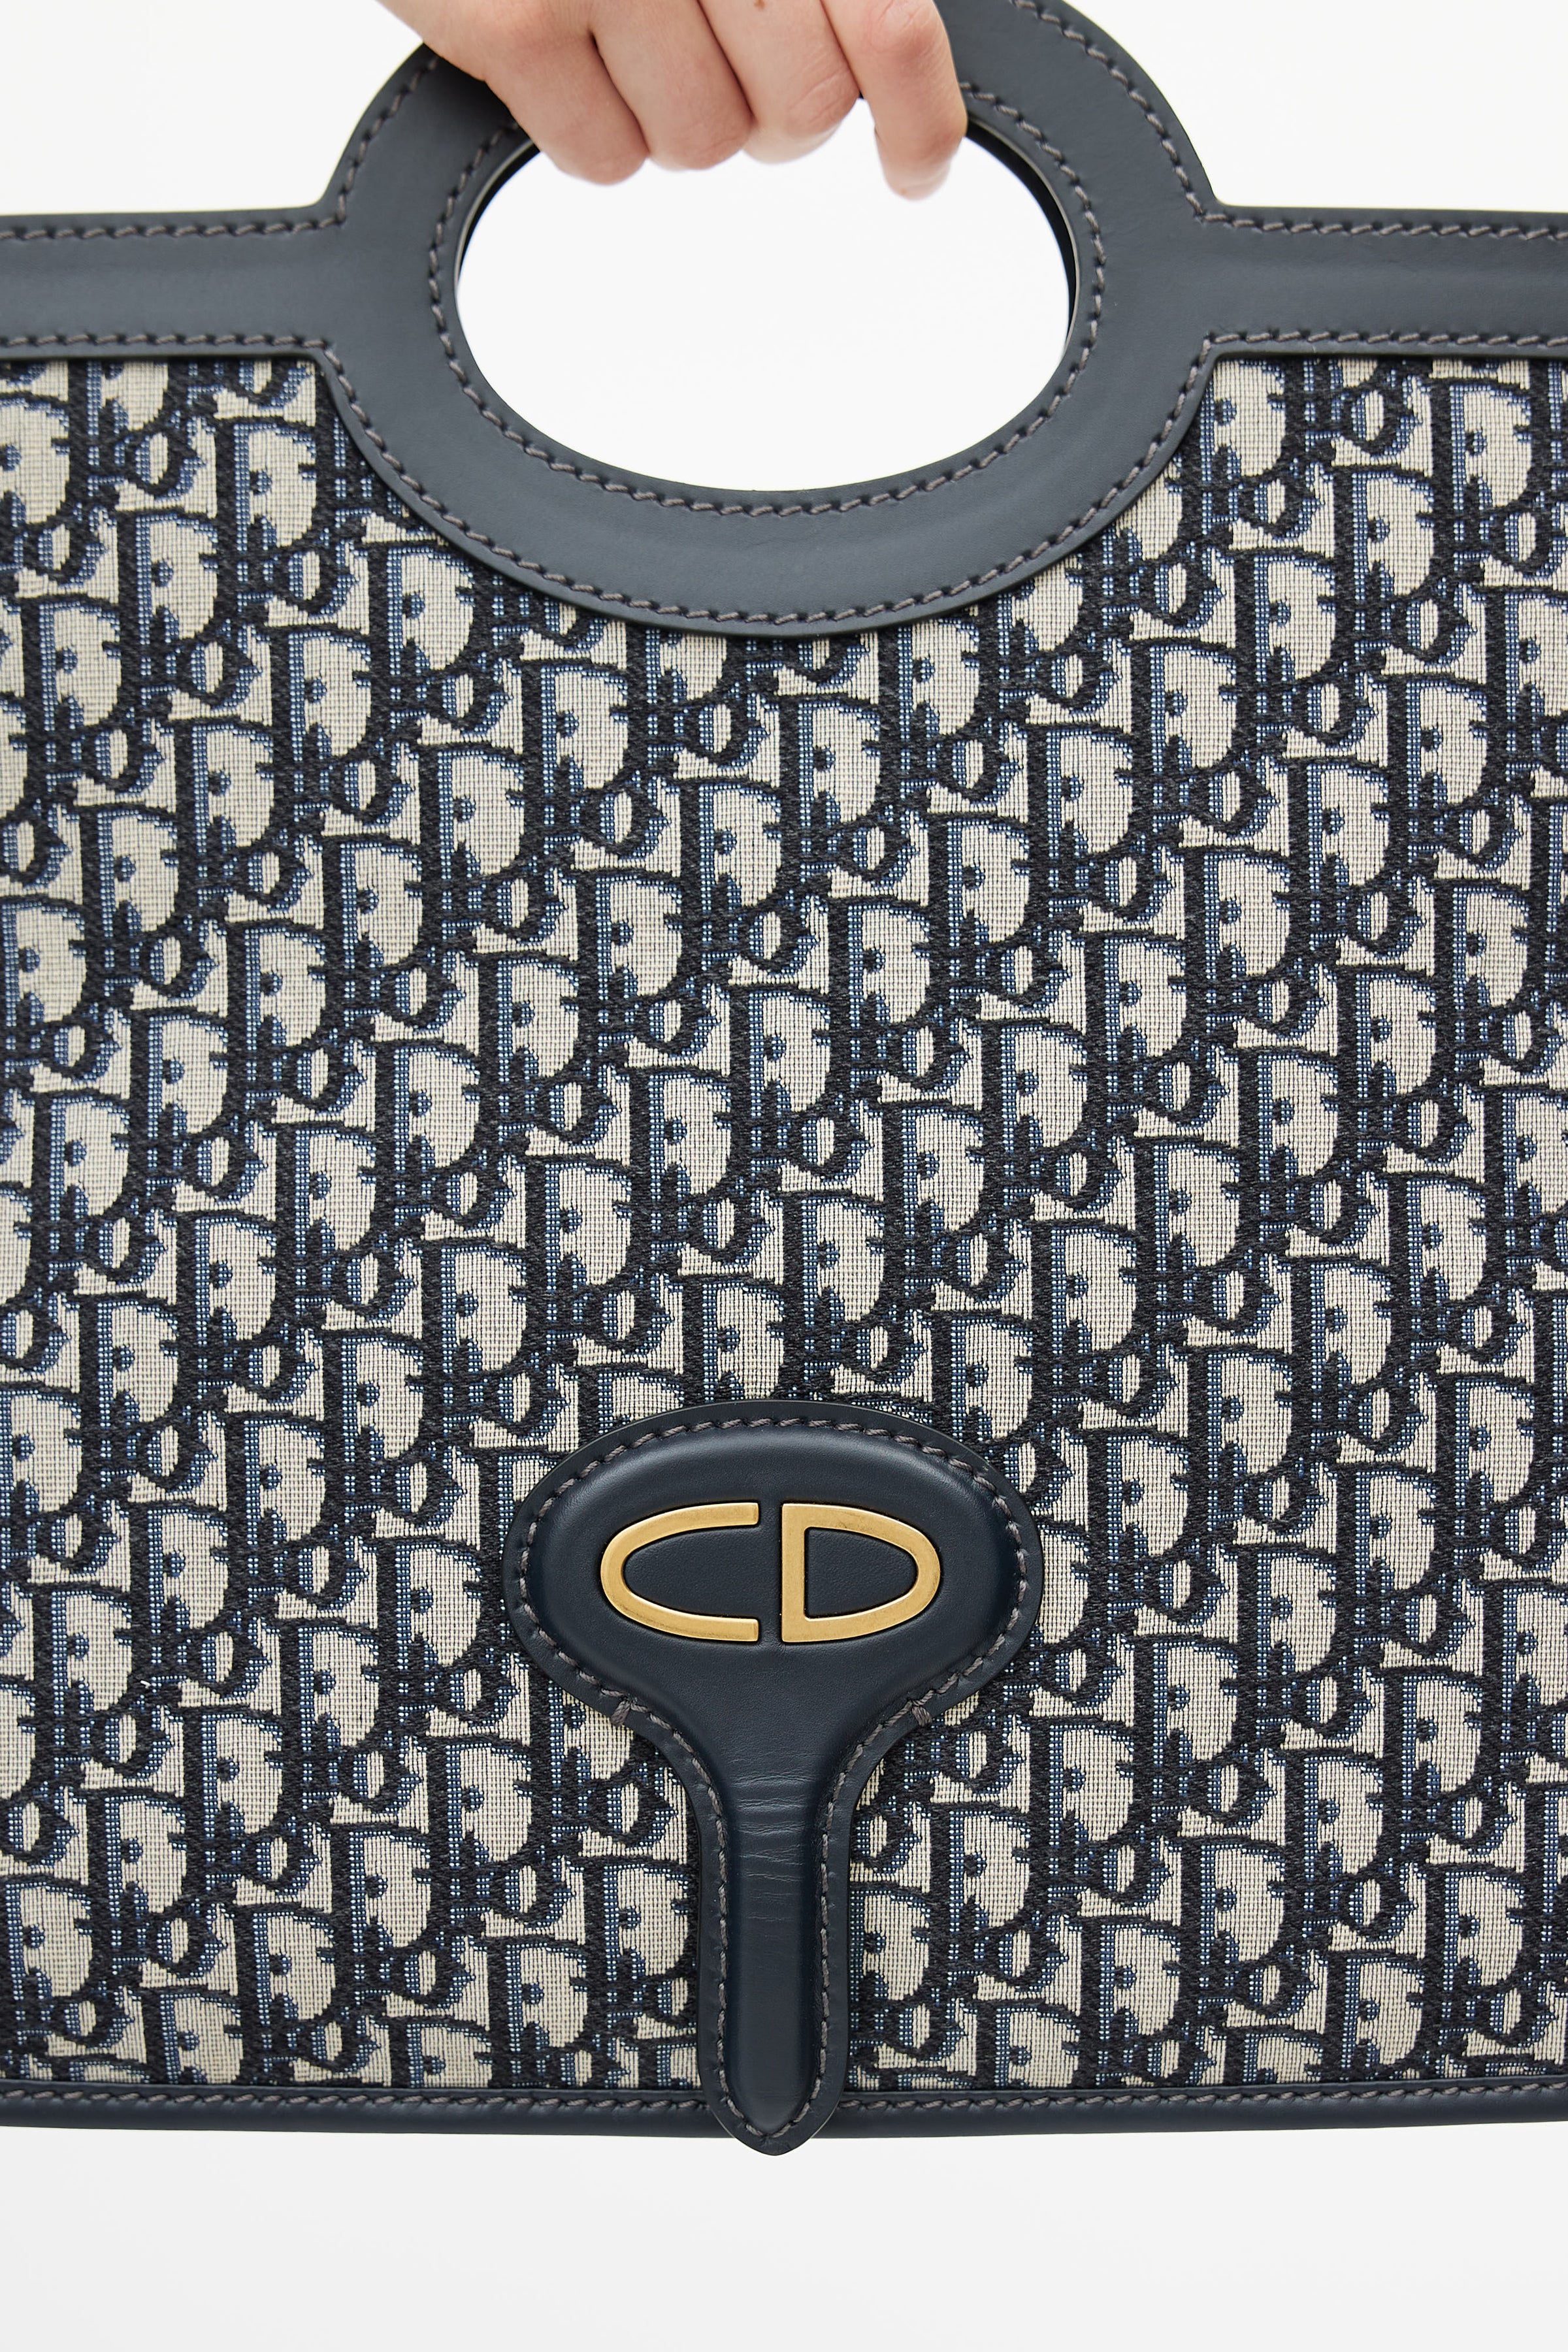 Dior clutch Oblique